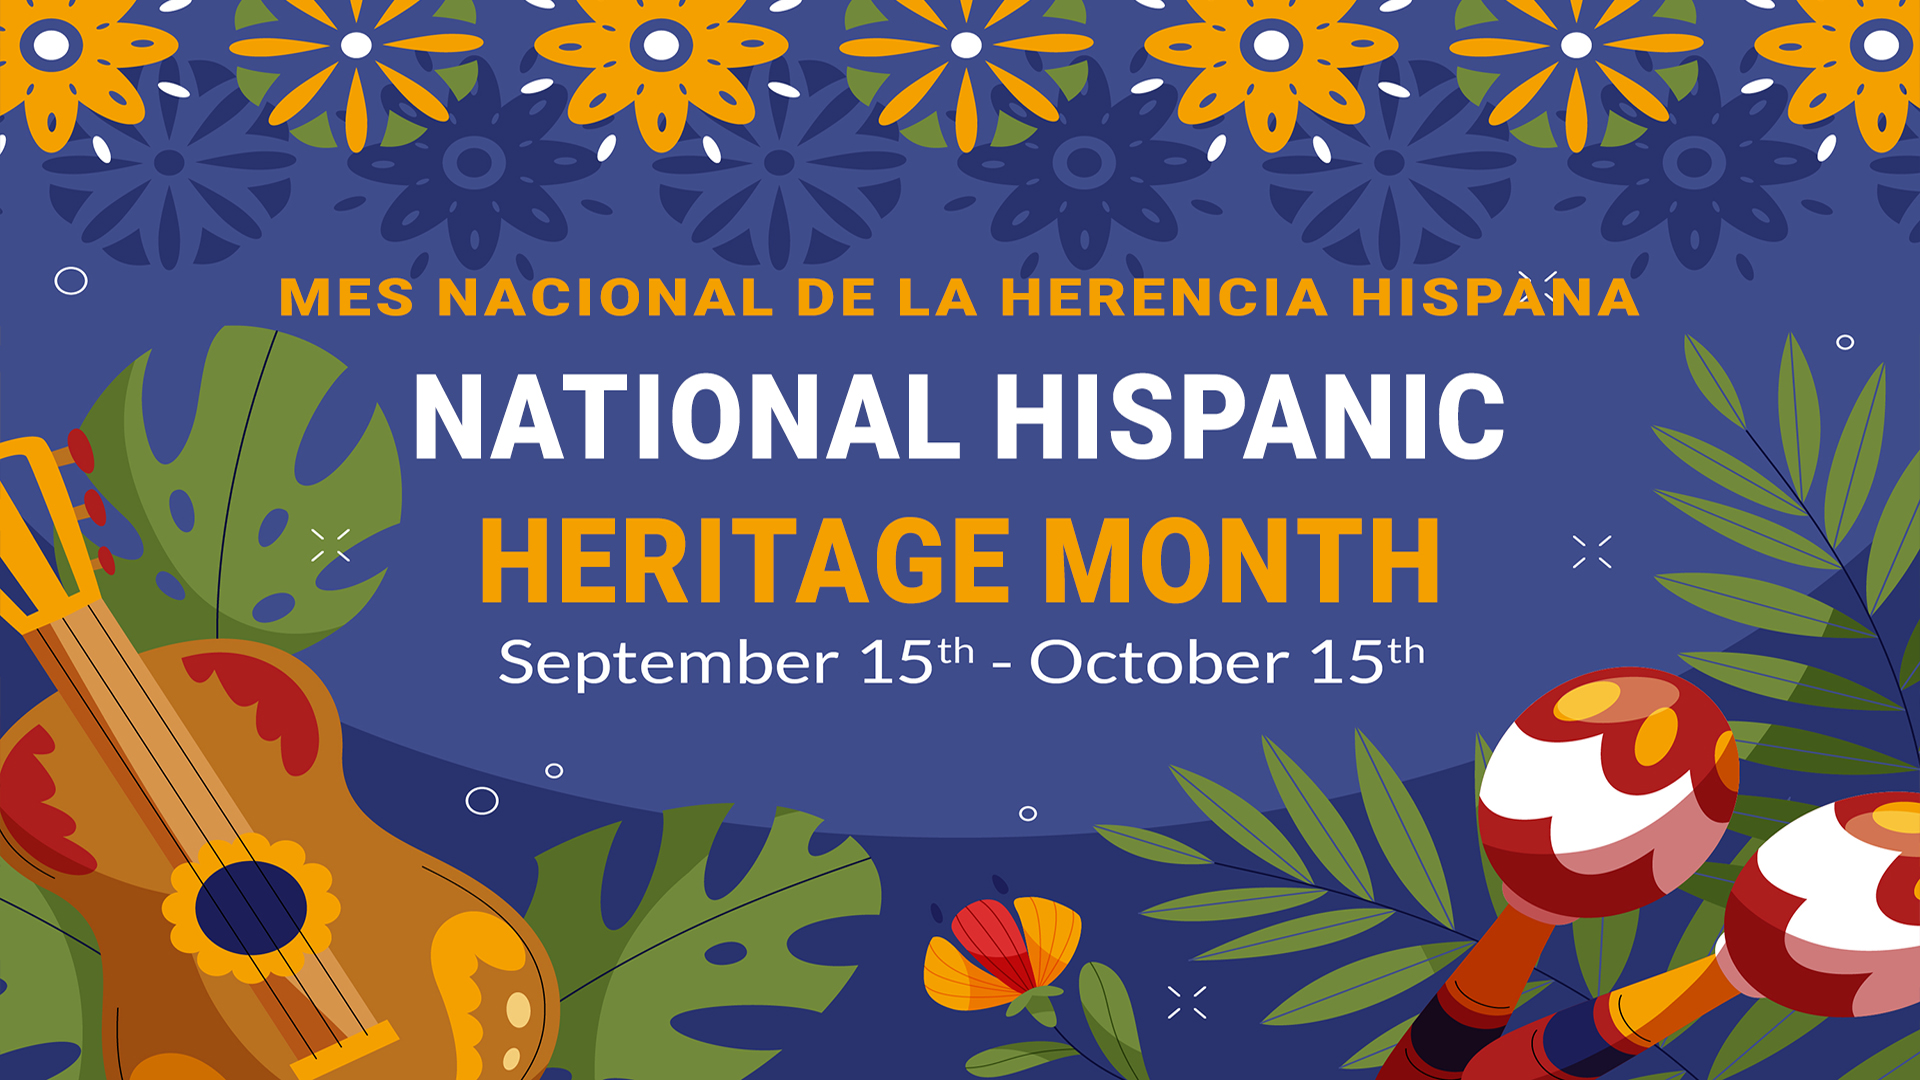 feature_Hispanic Heritage Month